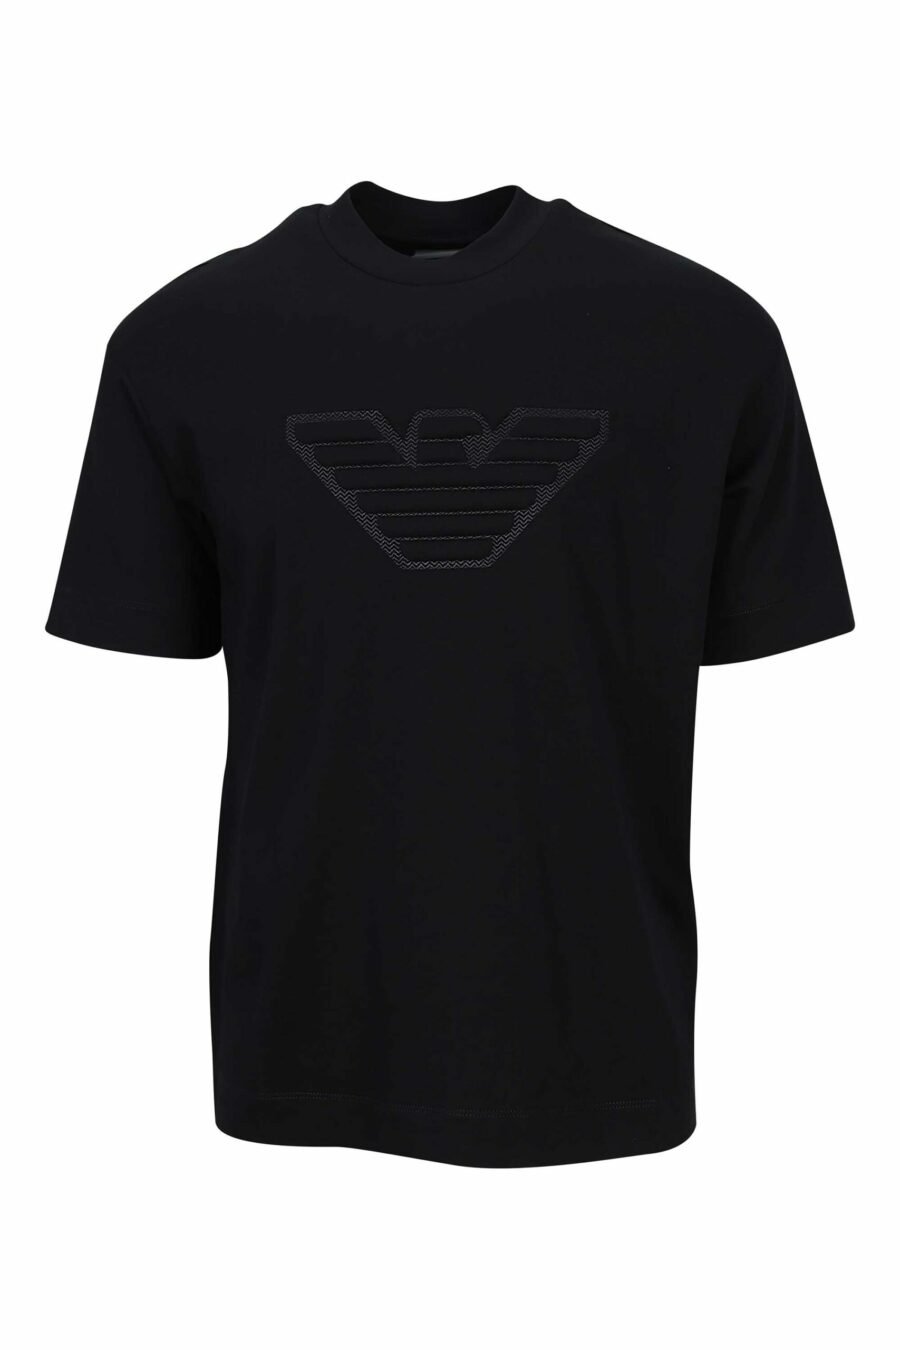 Schwarzes T-Shirt mit monochromem Adler-Maxilogo - 8057970432920 skaliert